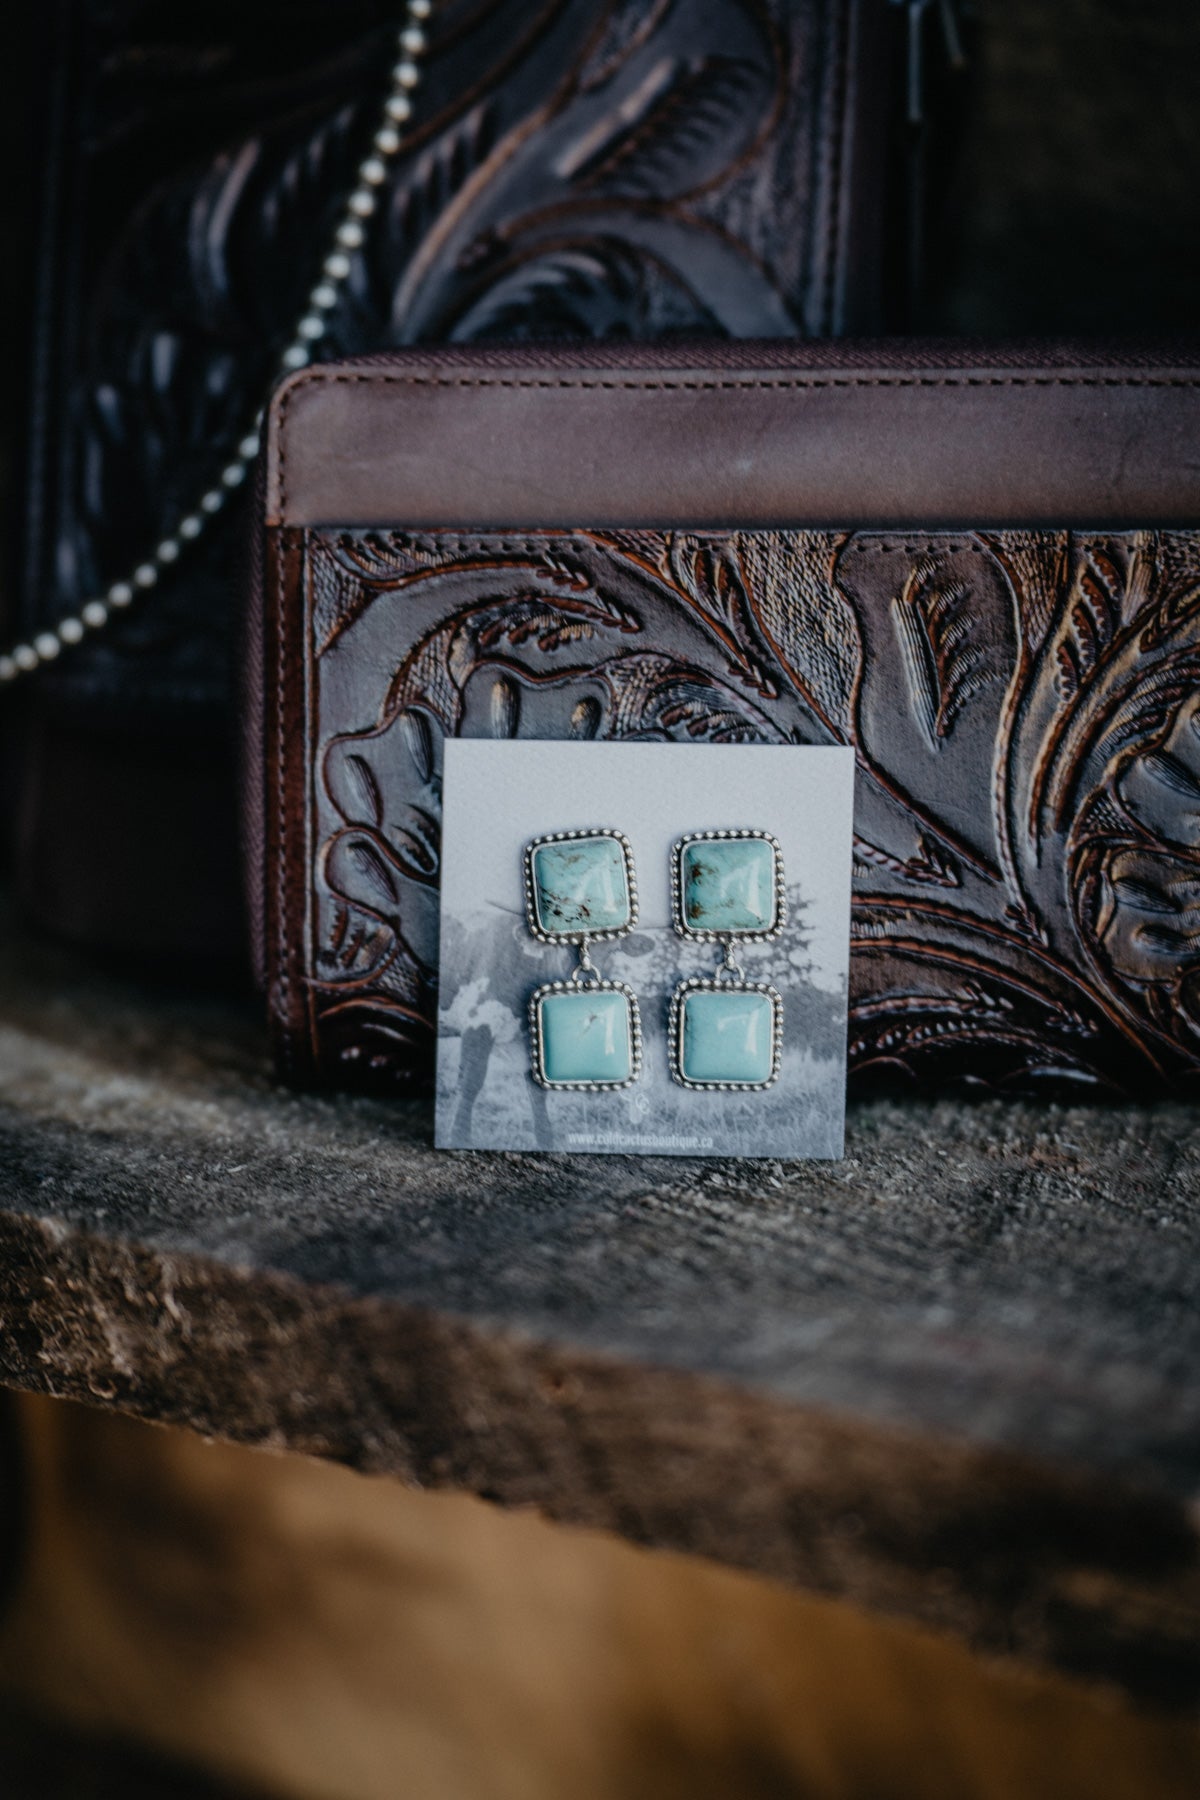 Double Turquoise Stud Earrings with Beaded Border